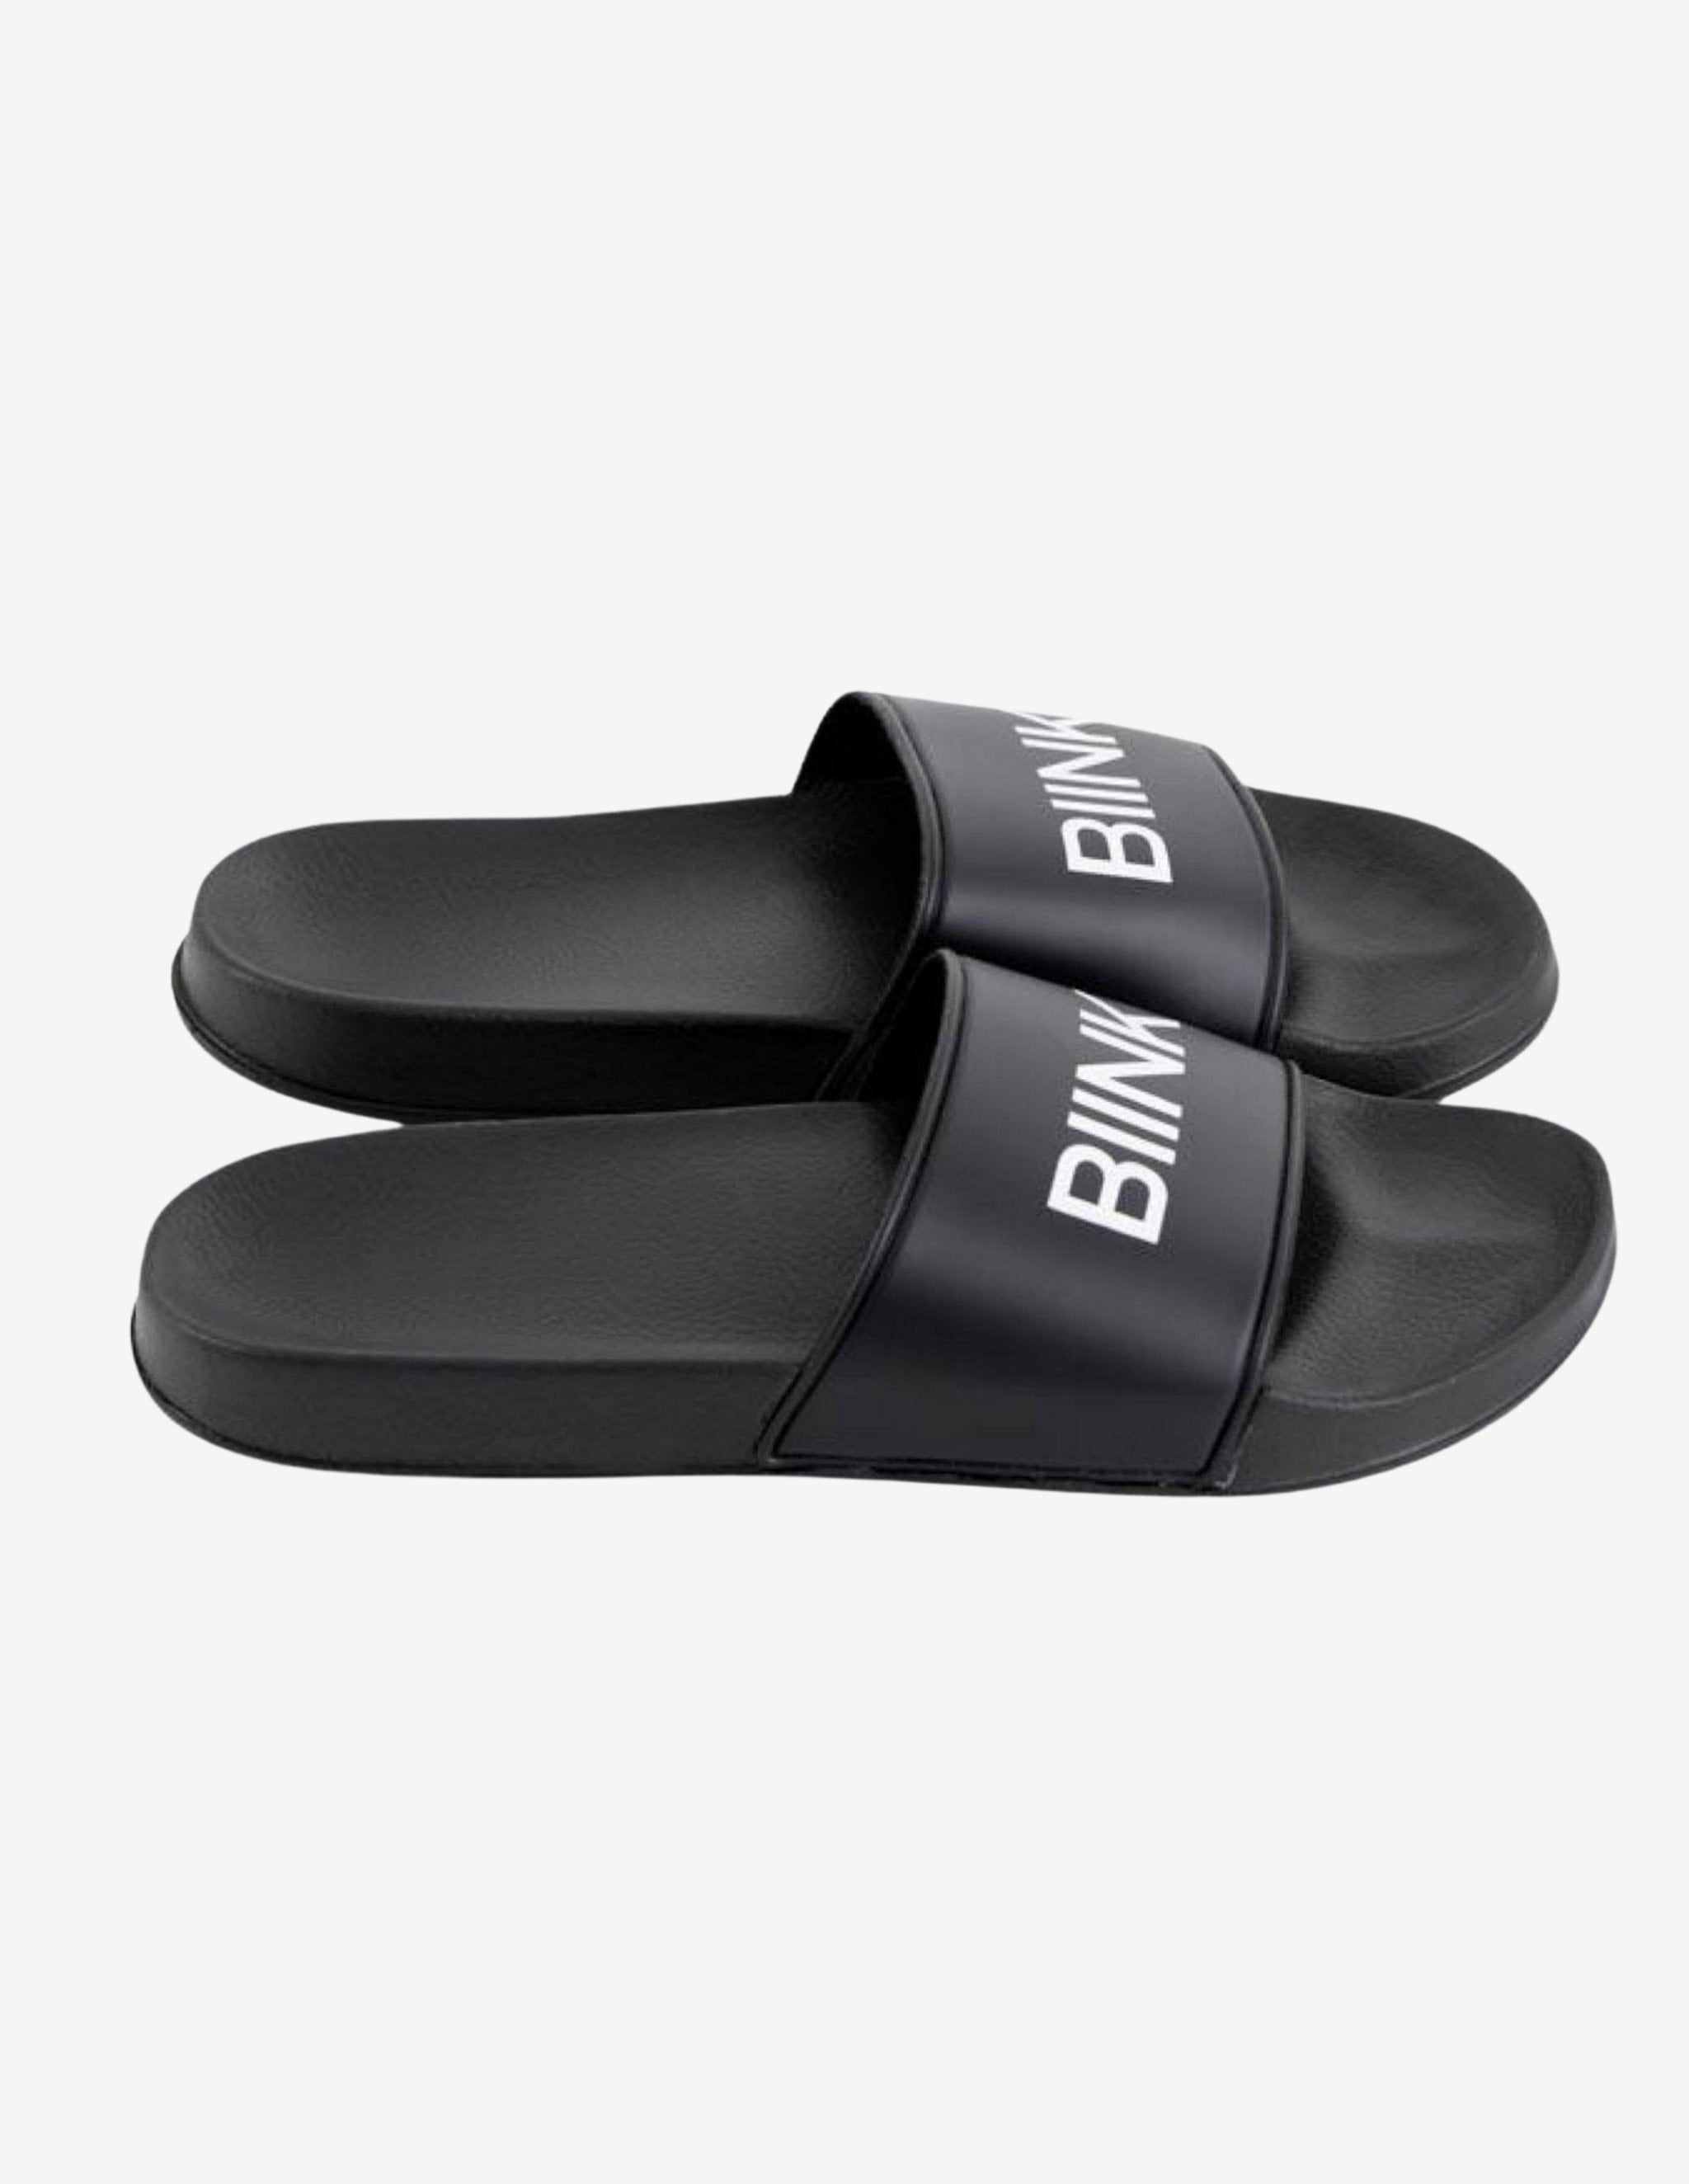 Unisex Athleisure Slides - Black-Footwear Man-Biink Athleisure-Guru Muscle